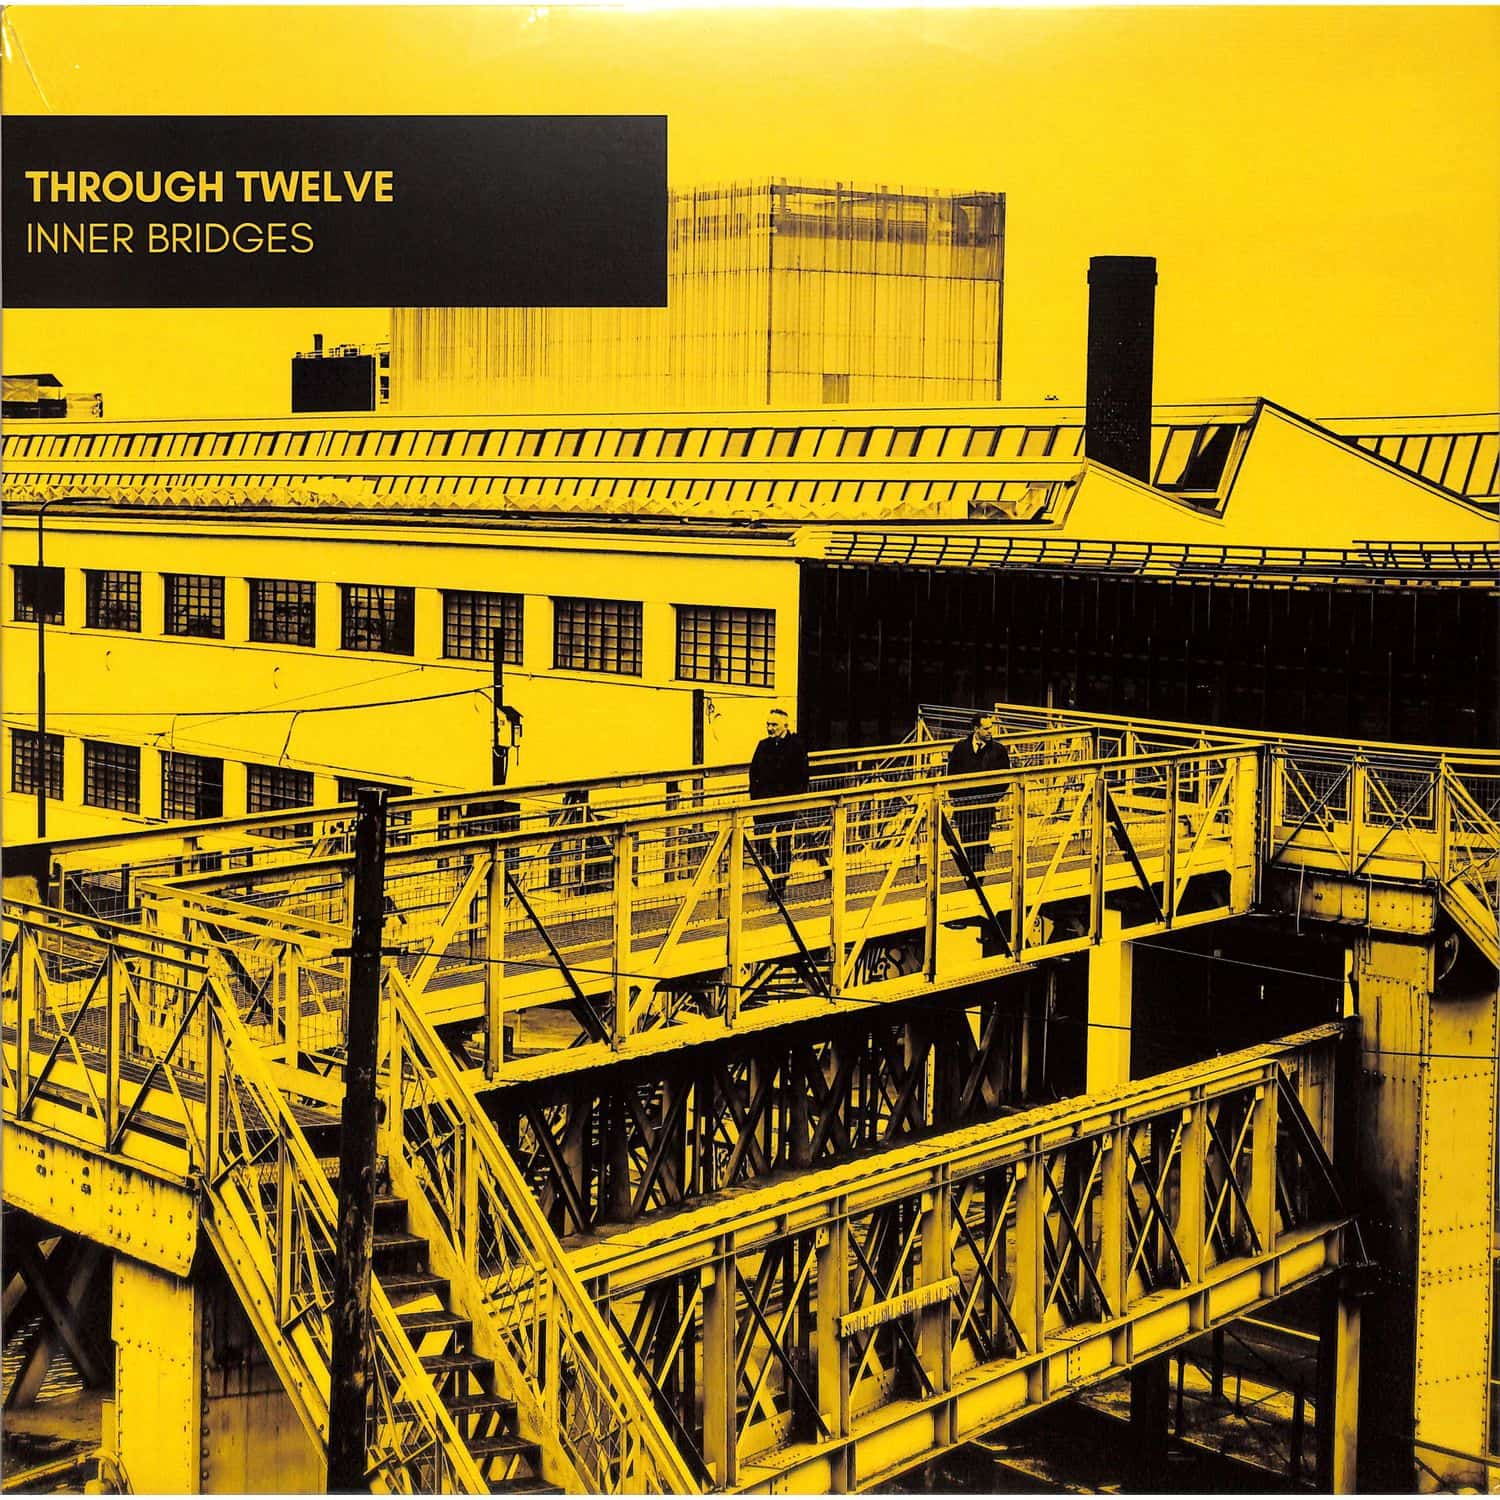 Through Twelve - INNER BRIDGES EP